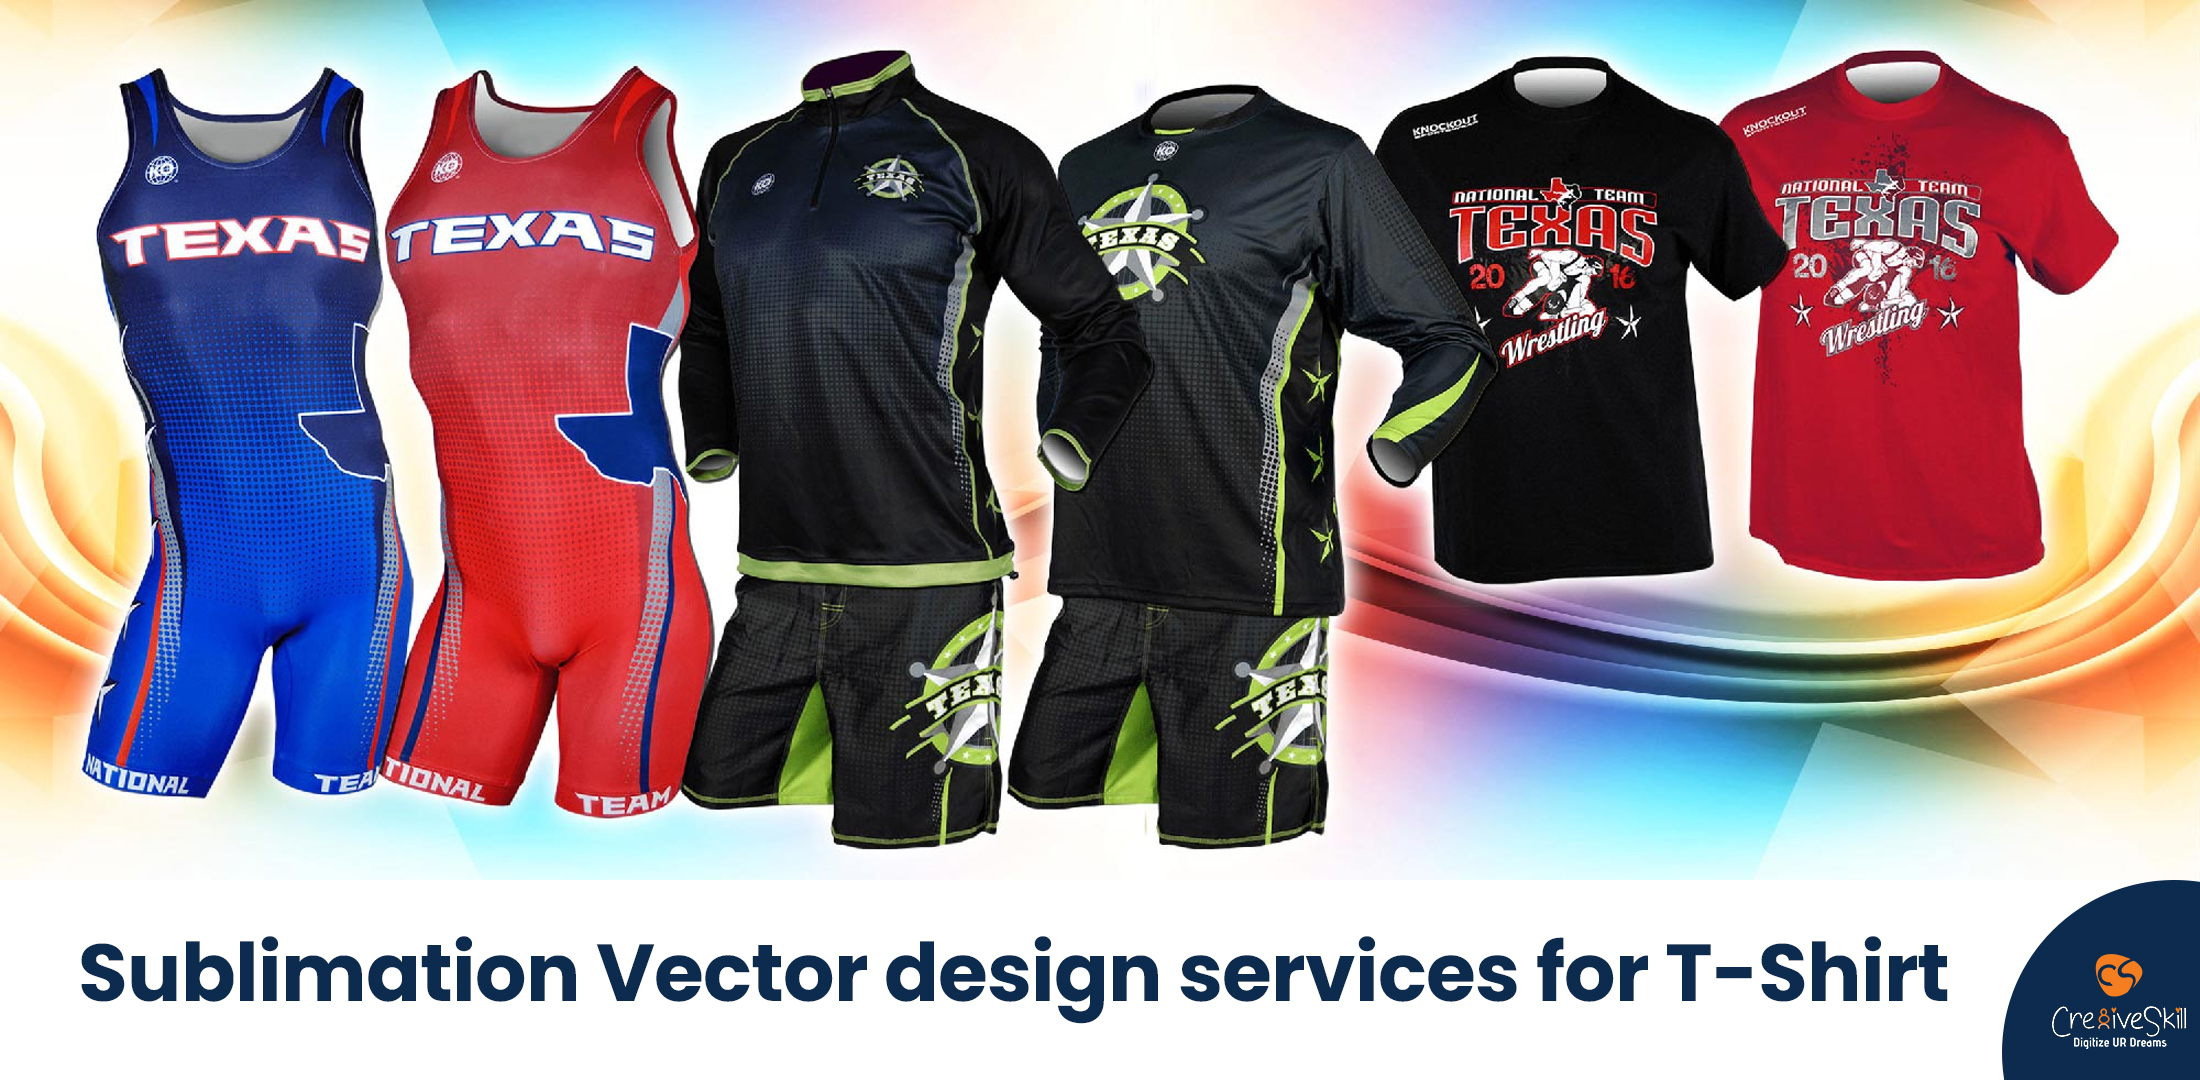 Sports t shirt design costa rica jersey concept Vector Image